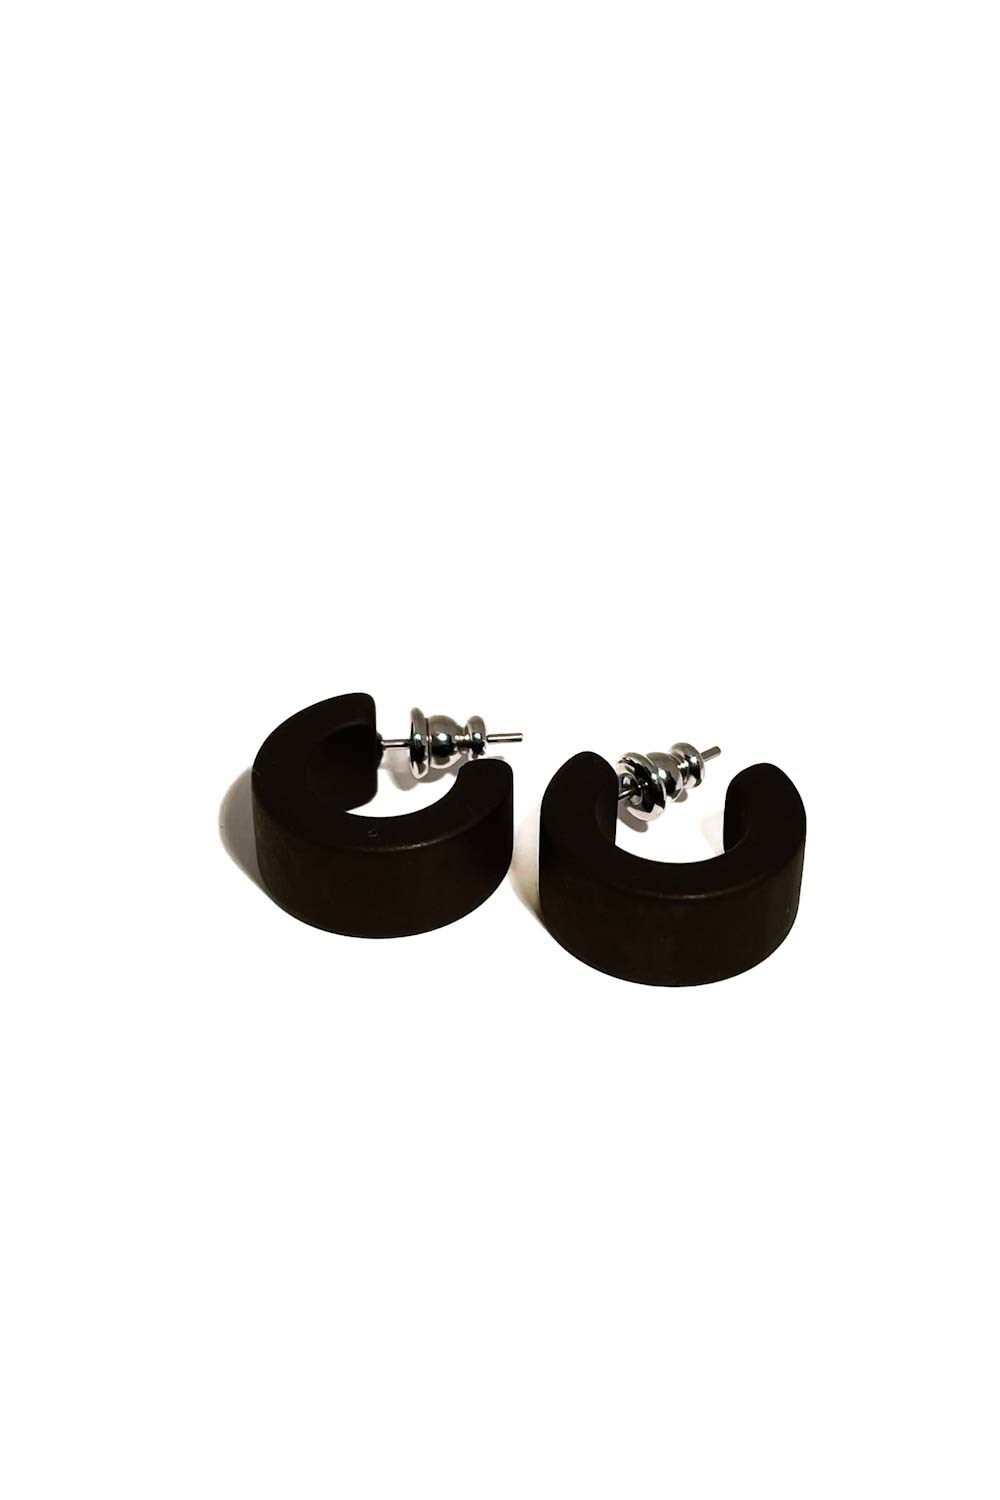 Earrings resin 60s style black